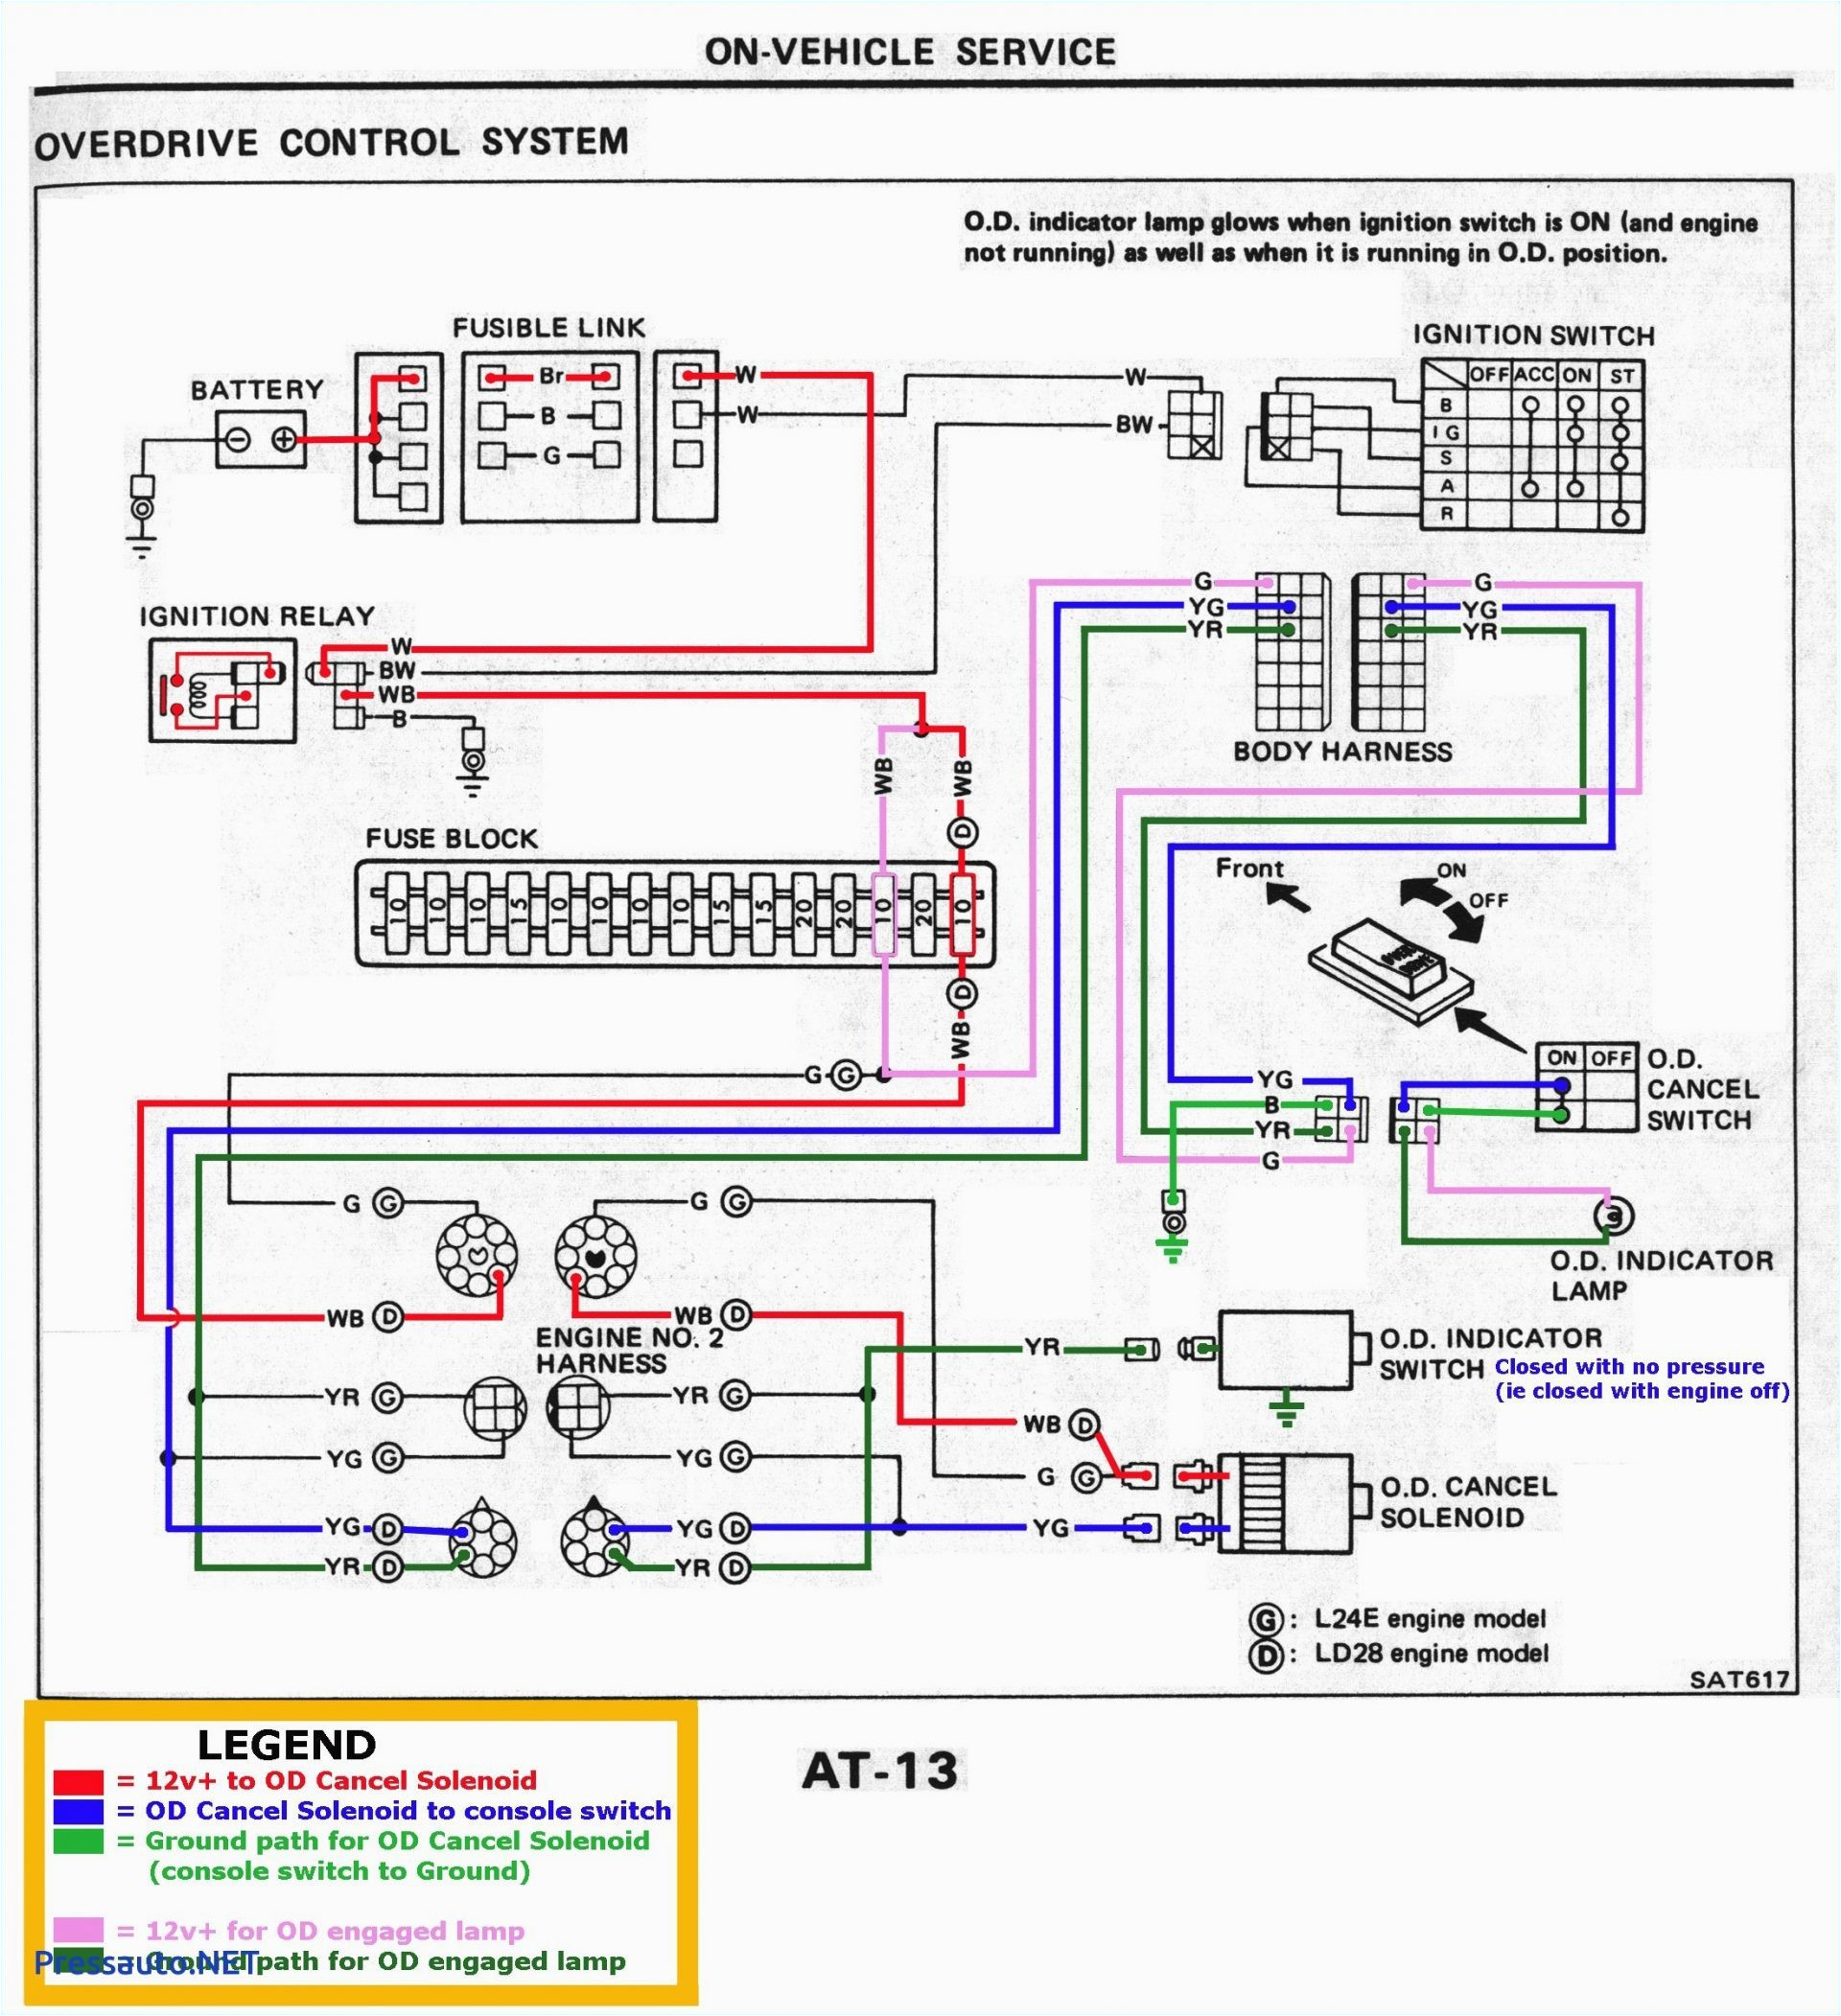 toyota fog lights wiring diagram wiring diagram technic fog light wiring diagram toyota